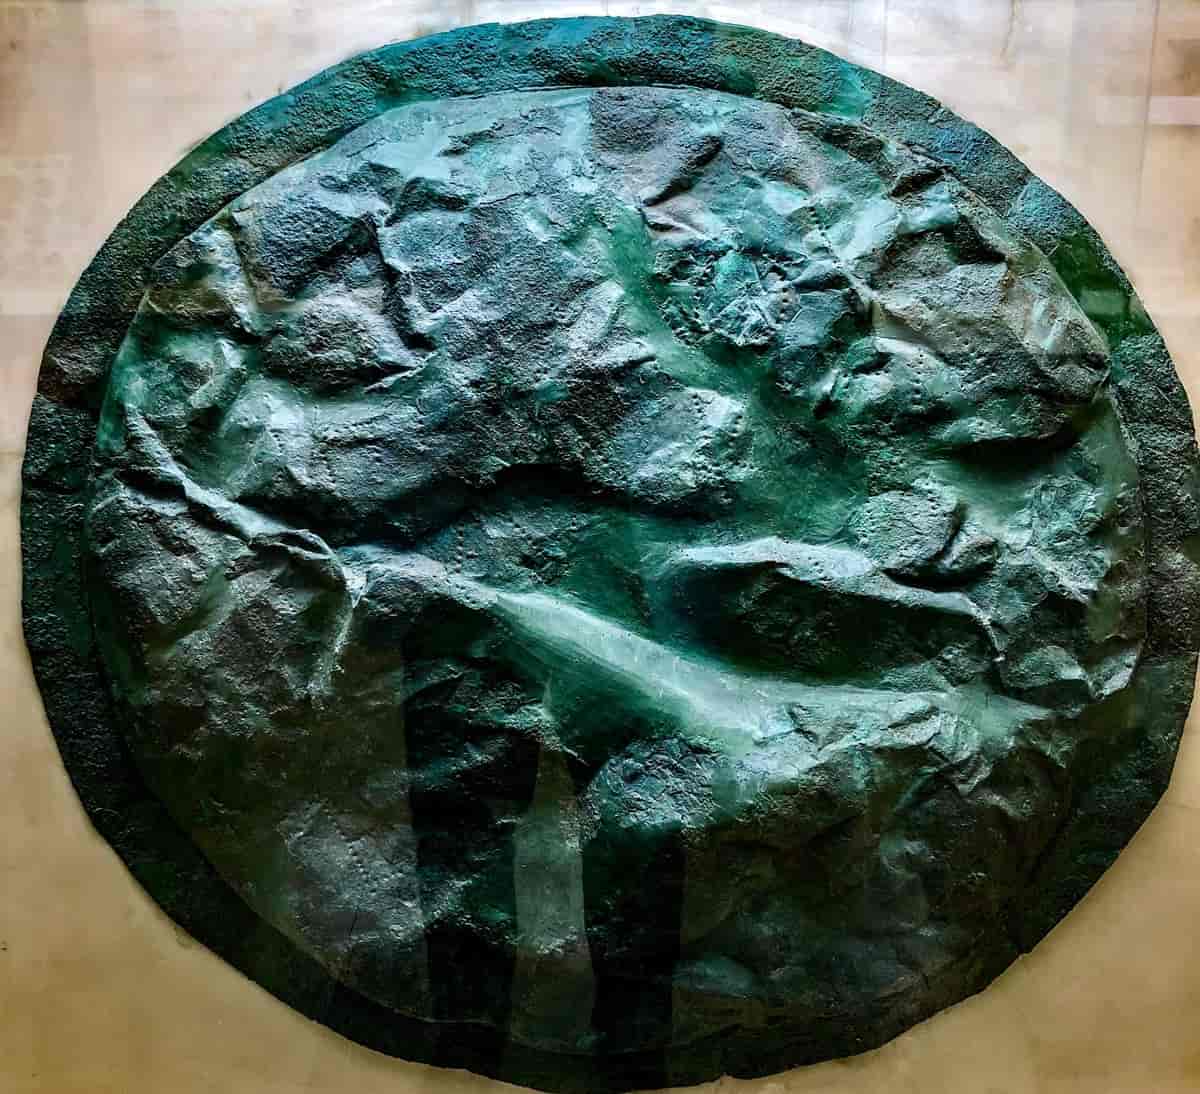 Spartansk skjold tatt av spartanerne i slaget ved Pylos. Agora Museum, Athen